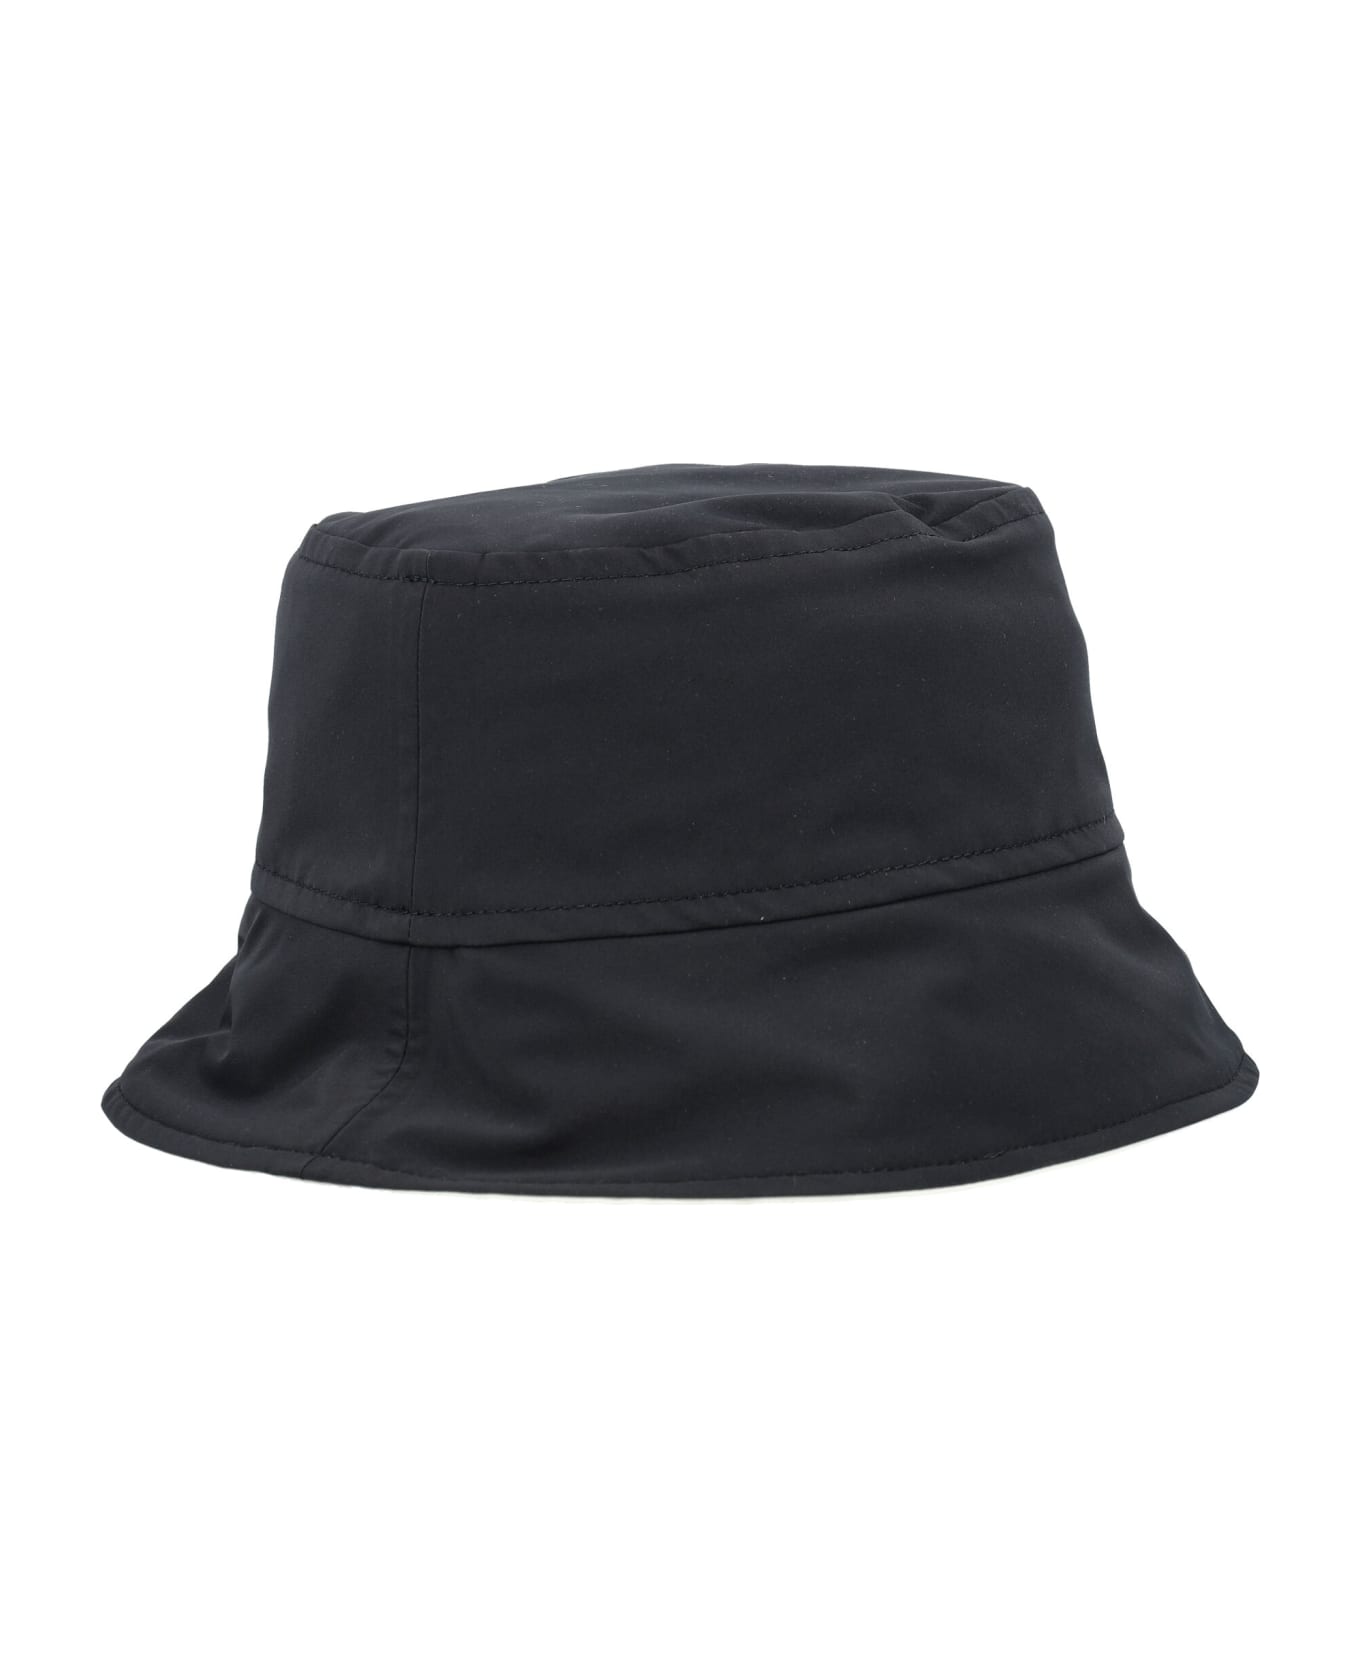 Canada Goose Cg Horizon Reversible Bucket Hat - Black/Northstar White